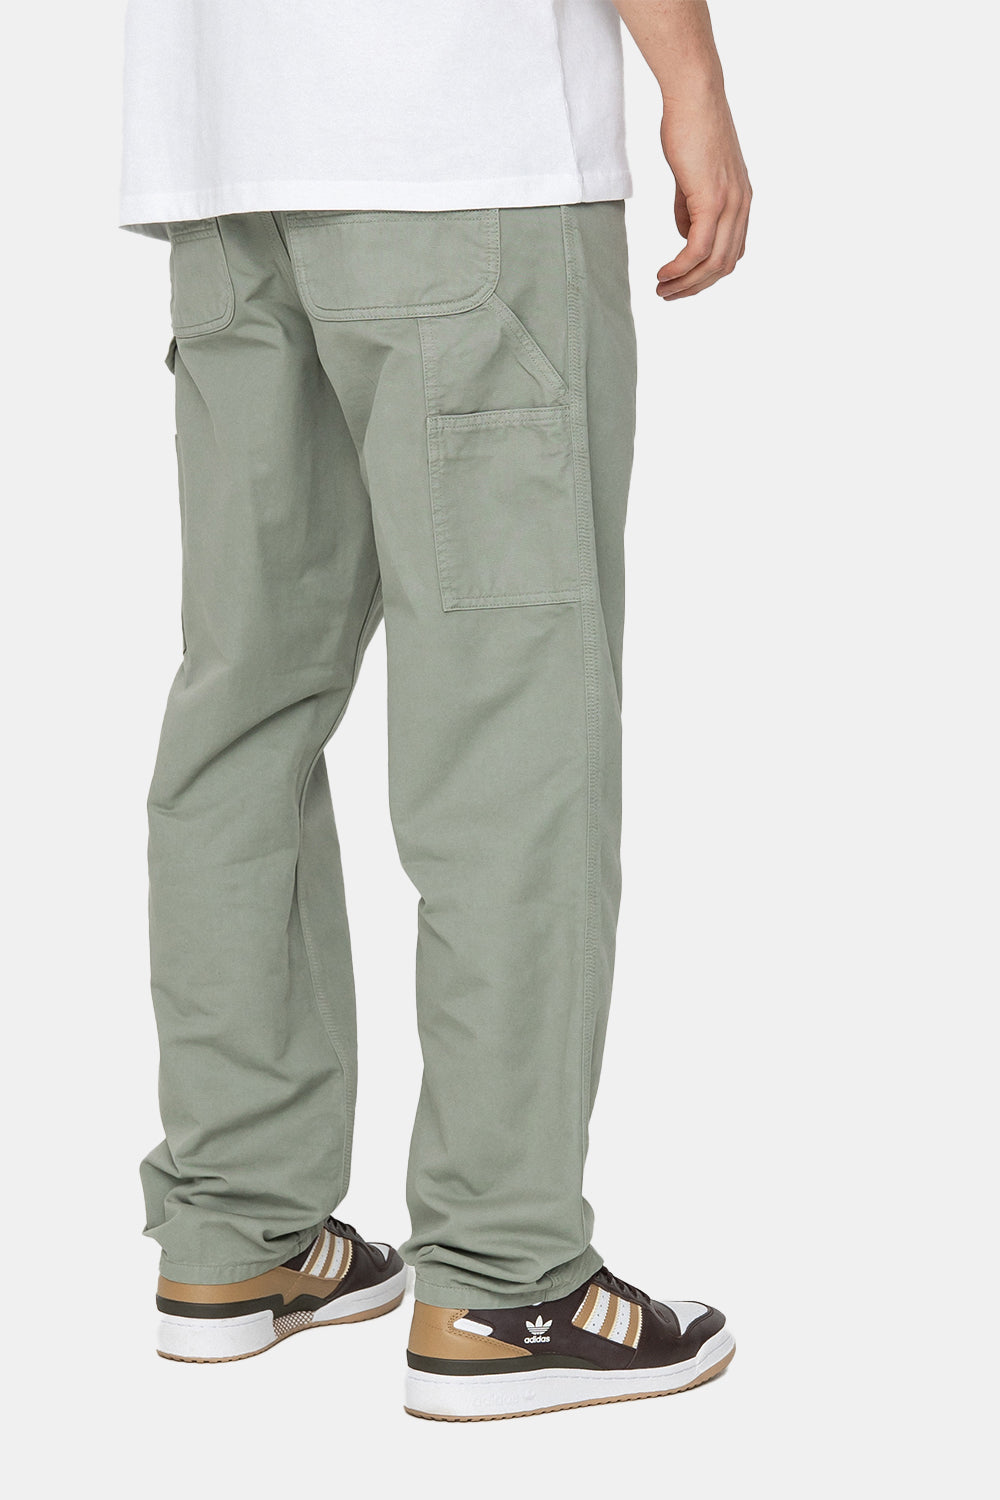 Carhartt WIP Single Knee Pant (Yucca Green)